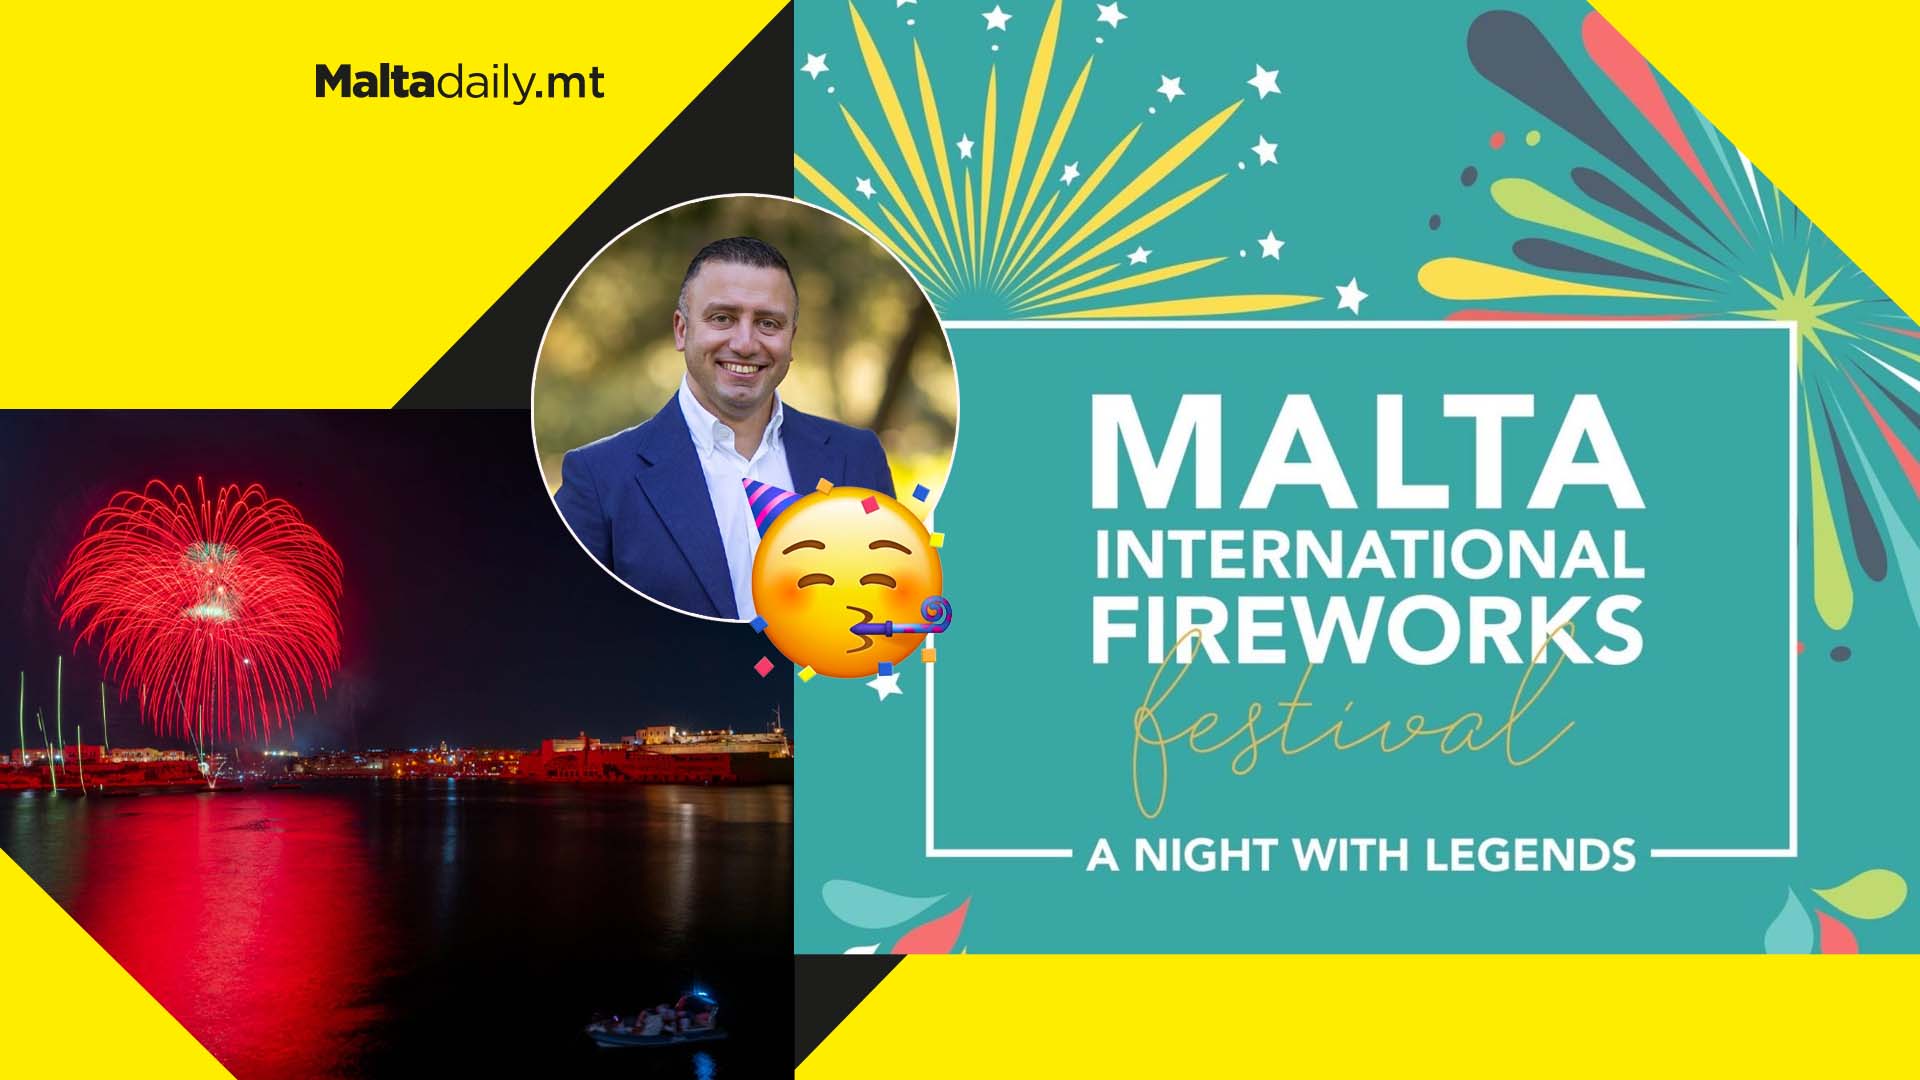 Malta International Fireworks Festival announced by Tourism Minister